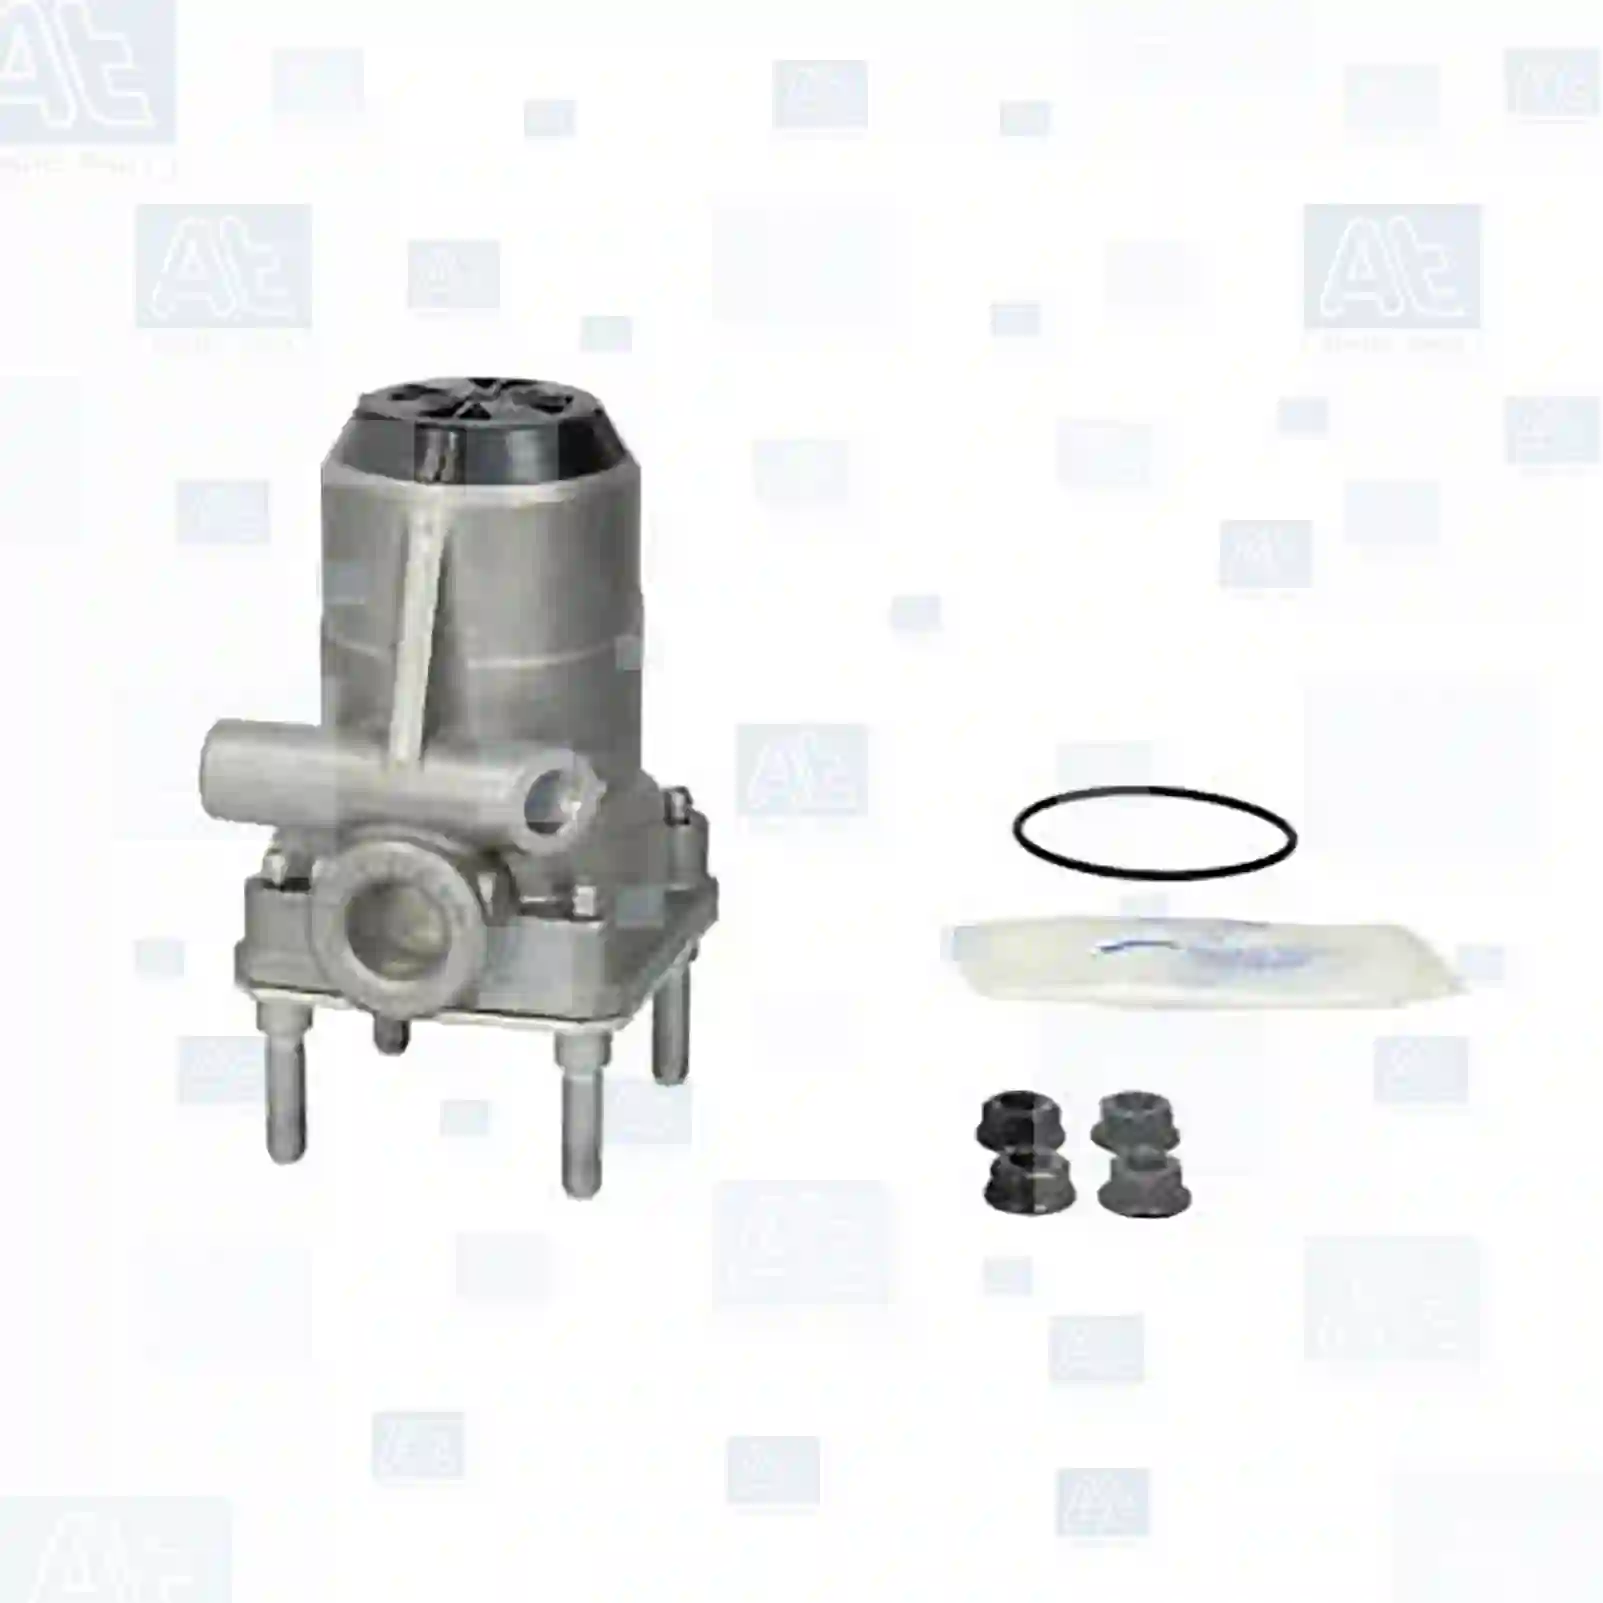 Various Valves Pressure control valve, at no: 77716195 ,  oem no:1636527, 42541044, 81326906016, 0022606057, 5001867251 At Spare Part | Engine, Accelerator Pedal, Camshaft, Connecting Rod, Crankcase, Crankshaft, Cylinder Head, Engine Suspension Mountings, Exhaust Manifold, Exhaust Gas Recirculation, Filter Kits, Flywheel Housing, General Overhaul Kits, Engine, Intake Manifold, Oil Cleaner, Oil Cooler, Oil Filter, Oil Pump, Oil Sump, Piston & Liner, Sensor & Switch, Timing Case, Turbocharger, Cooling System, Belt Tensioner, Coolant Filter, Coolant Pipe, Corrosion Prevention Agent, Drive, Expansion Tank, Fan, Intercooler, Monitors & Gauges, Radiator, Thermostat, V-Belt / Timing belt, Water Pump, Fuel System, Electronical Injector Unit, Feed Pump, Fuel Filter, cpl., Fuel Gauge Sender,  Fuel Line, Fuel Pump, Fuel Tank, Injection Line Kit, Injection Pump, Exhaust System, Clutch & Pedal, Gearbox, Propeller Shaft, Axles, Brake System, Hubs & Wheels, Suspension, Leaf Spring, Universal Parts / Accessories, Steering, Electrical System, Cabin